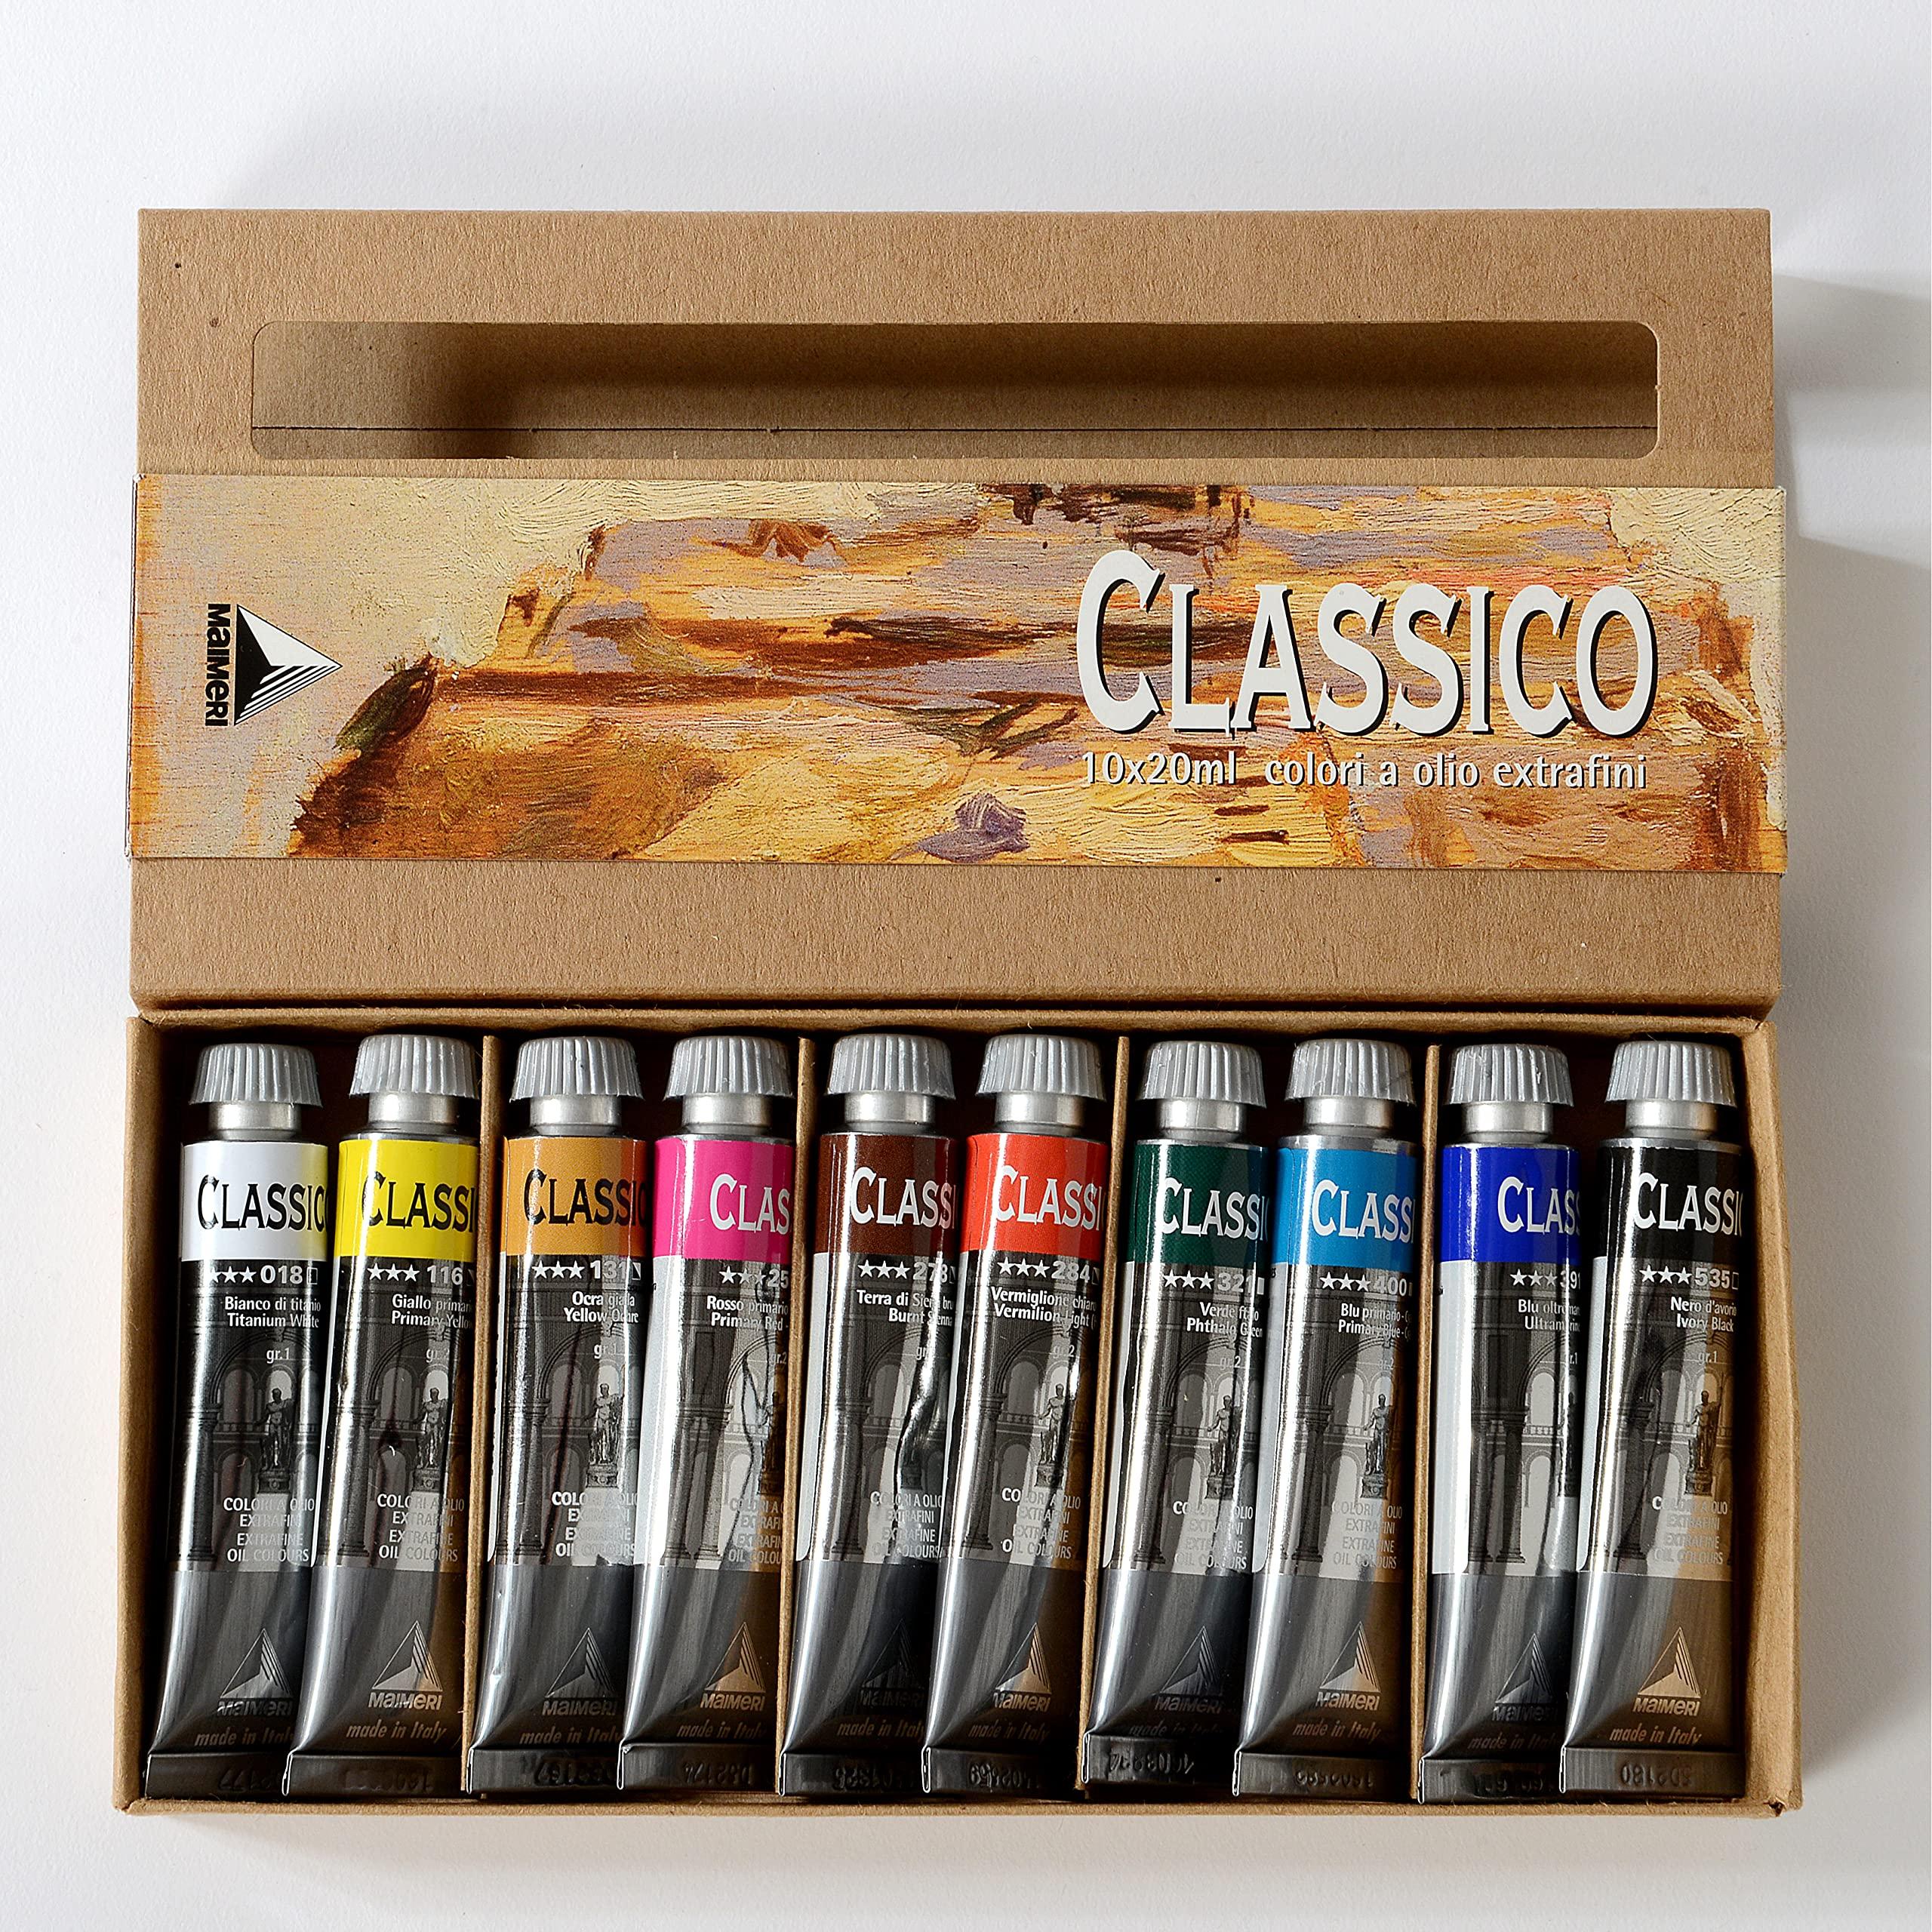 MAIMERI - CLASSICO - Set colori a olio extrafini 10 x 20 ml